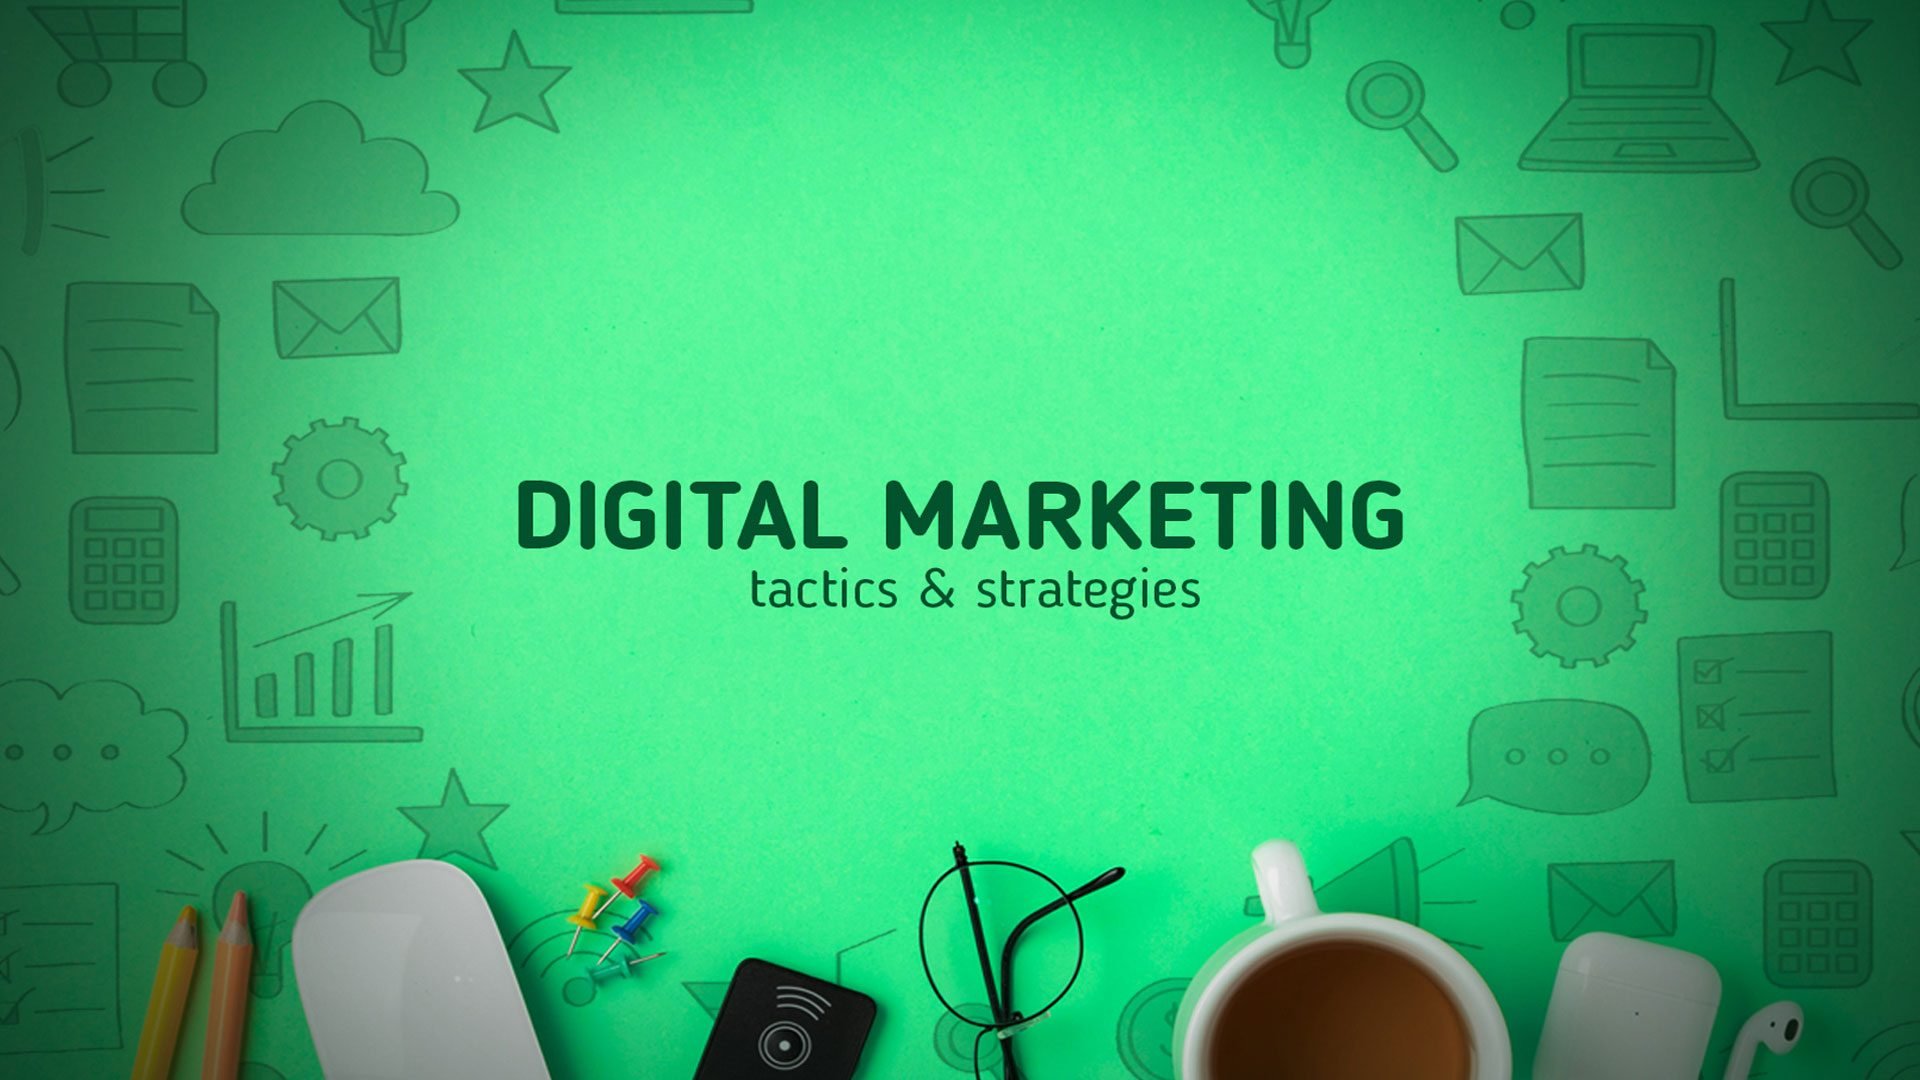 Digital Marketing Tactics and strategies